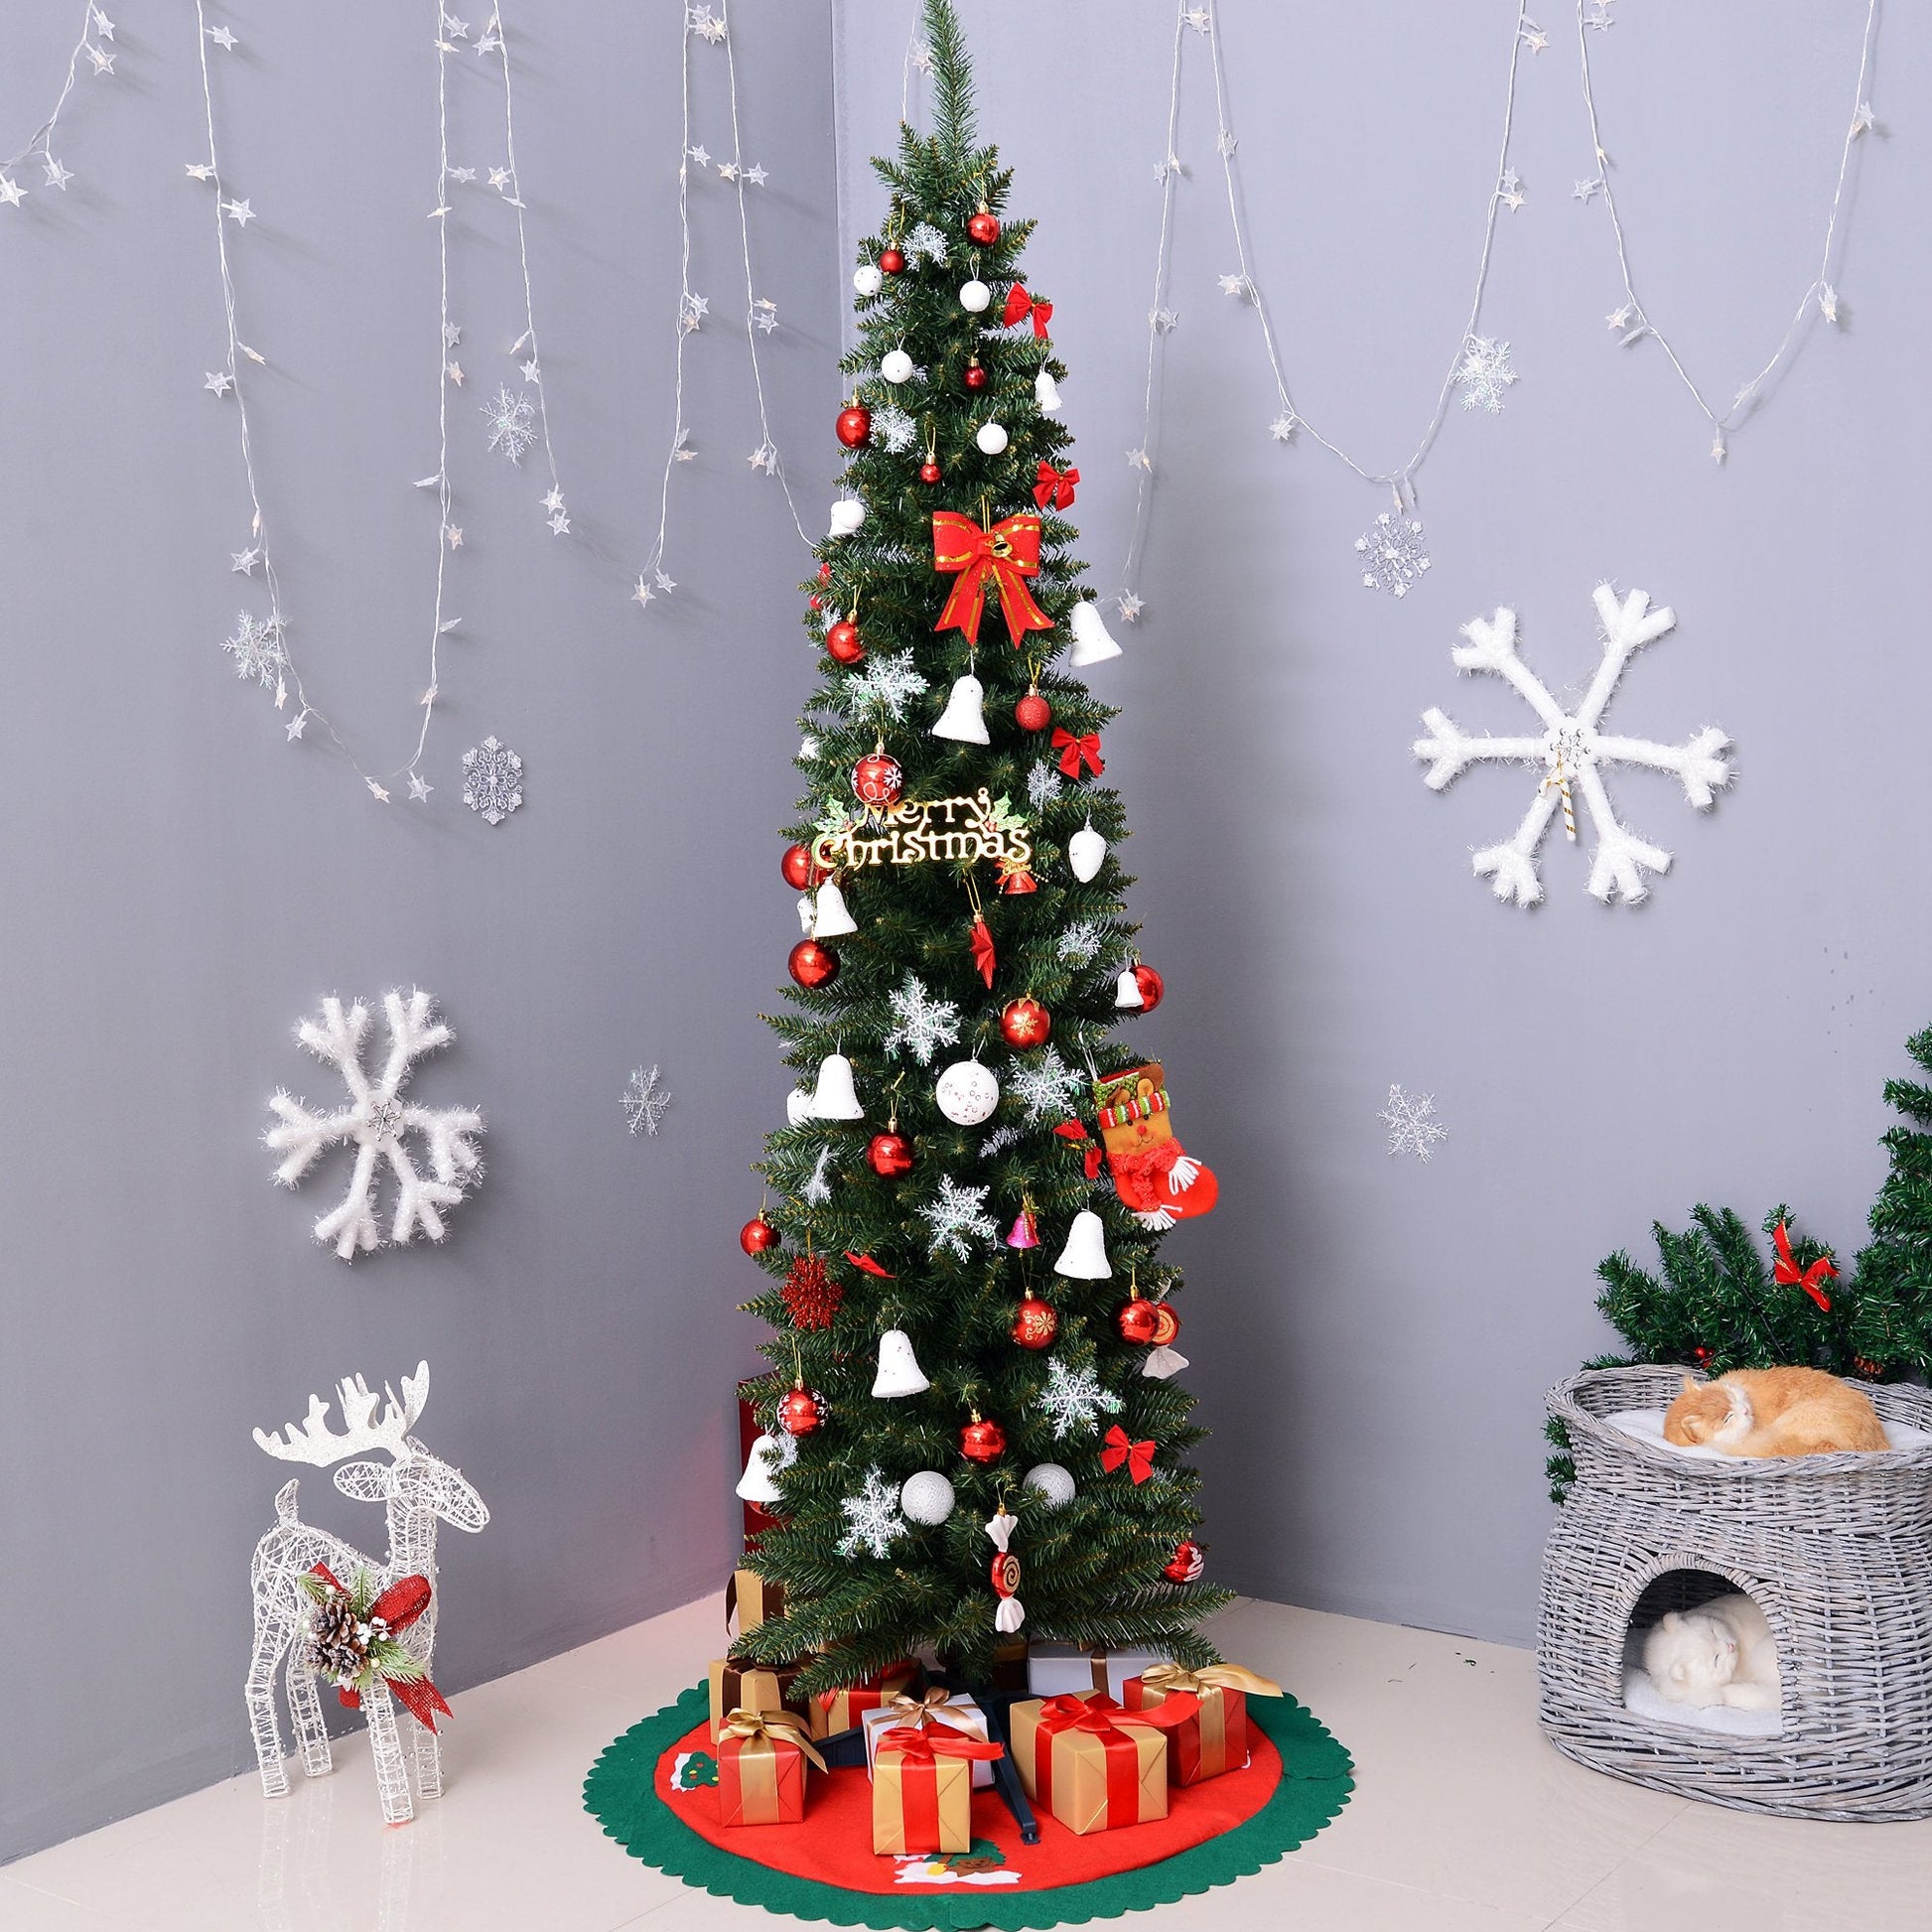 HOMCOM 7ft Artificial Pine Pencil Slim Christmas Tree with Stand - maplin.co.uk